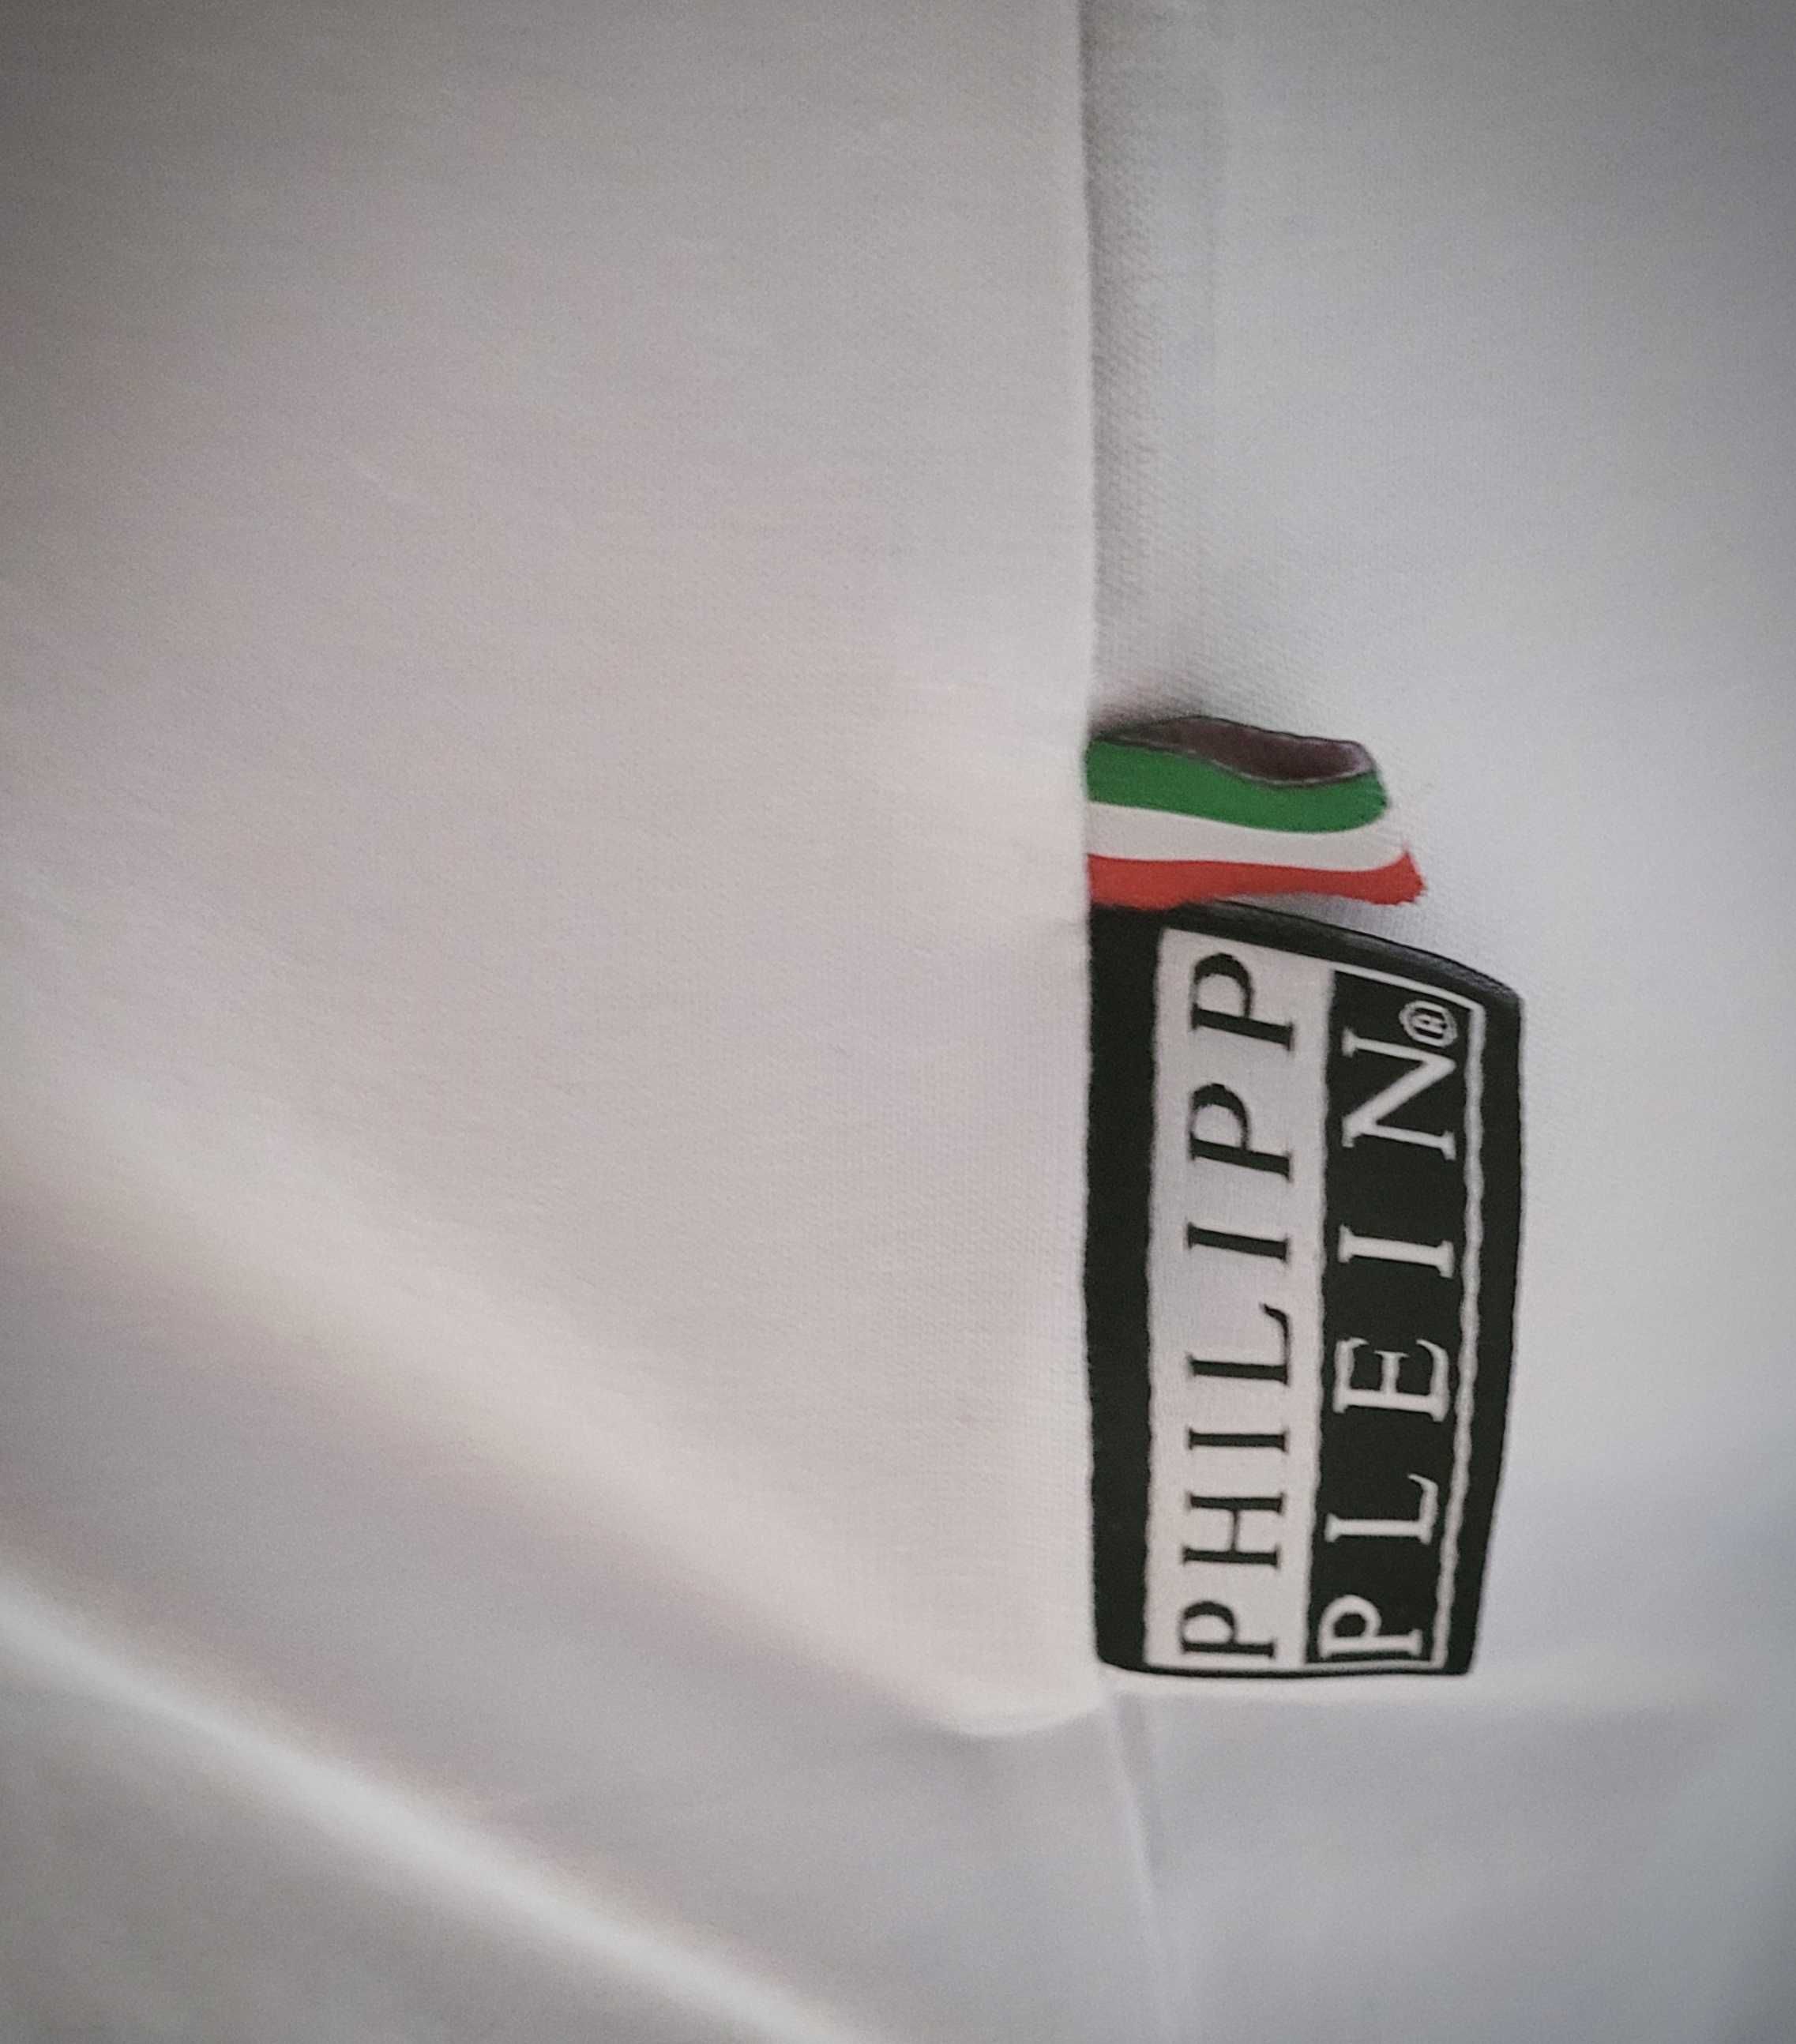 Koszulka T-shirt męski Philipp Plein Skull biała